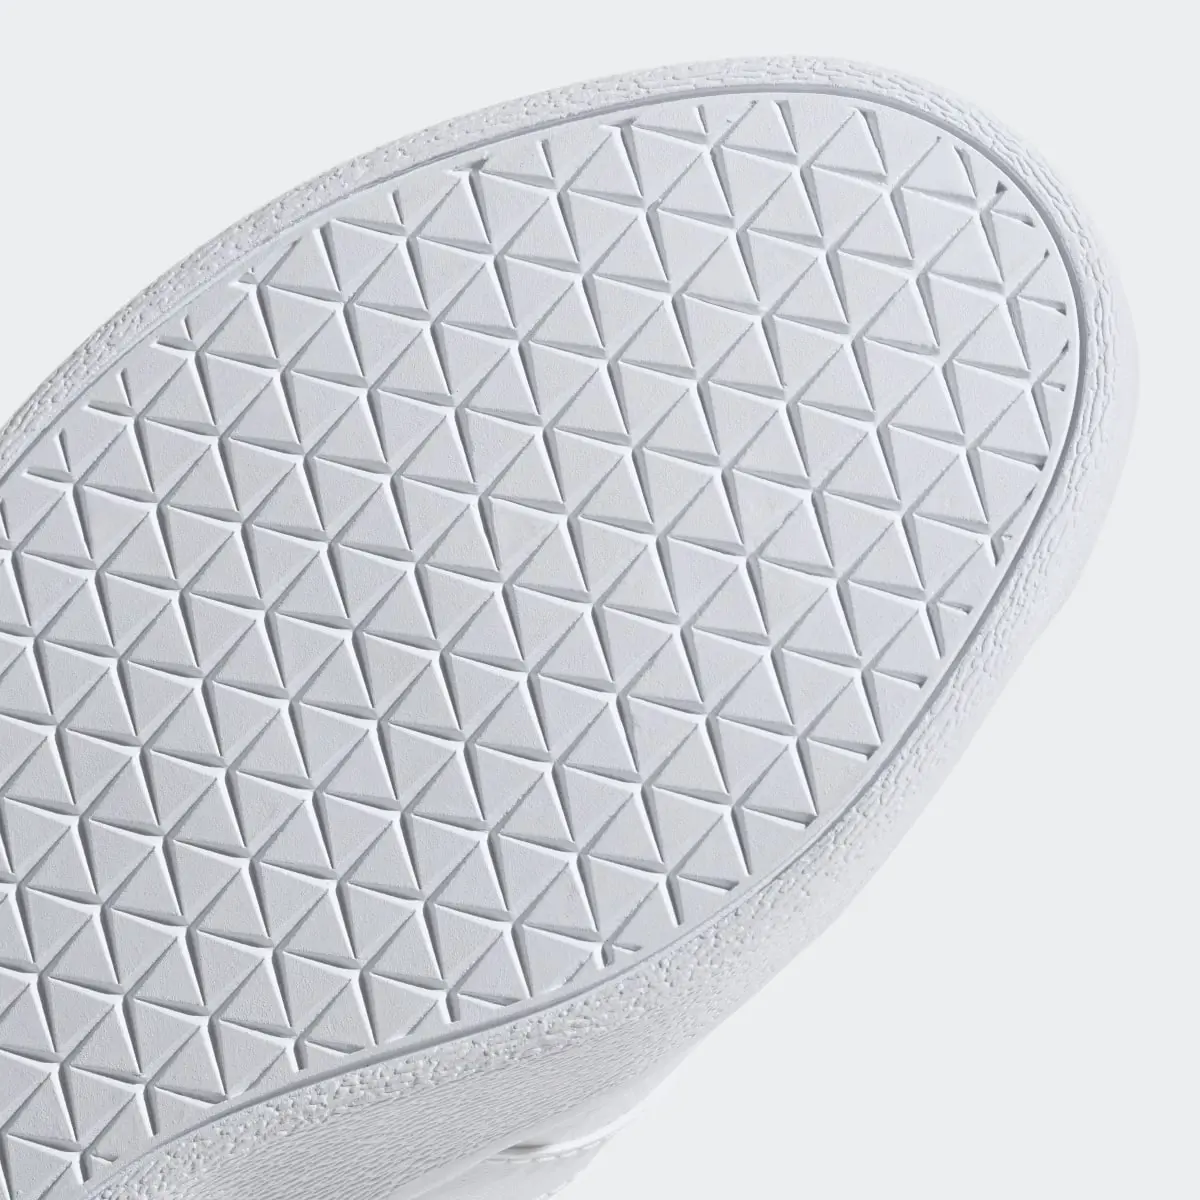 Adidas Chaussure VL Court 2.0. 3